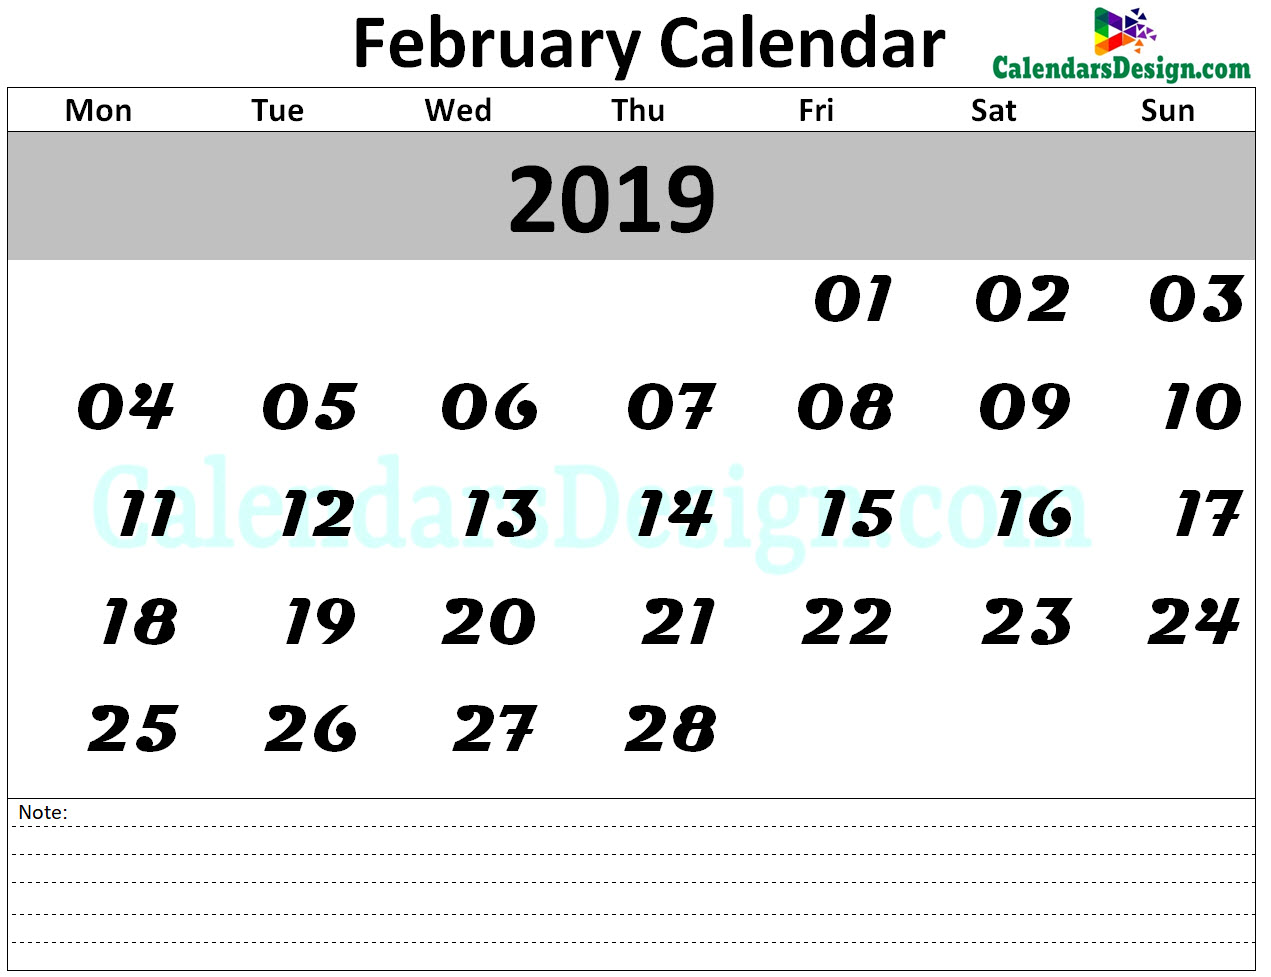 February Calendar 2019 Printable